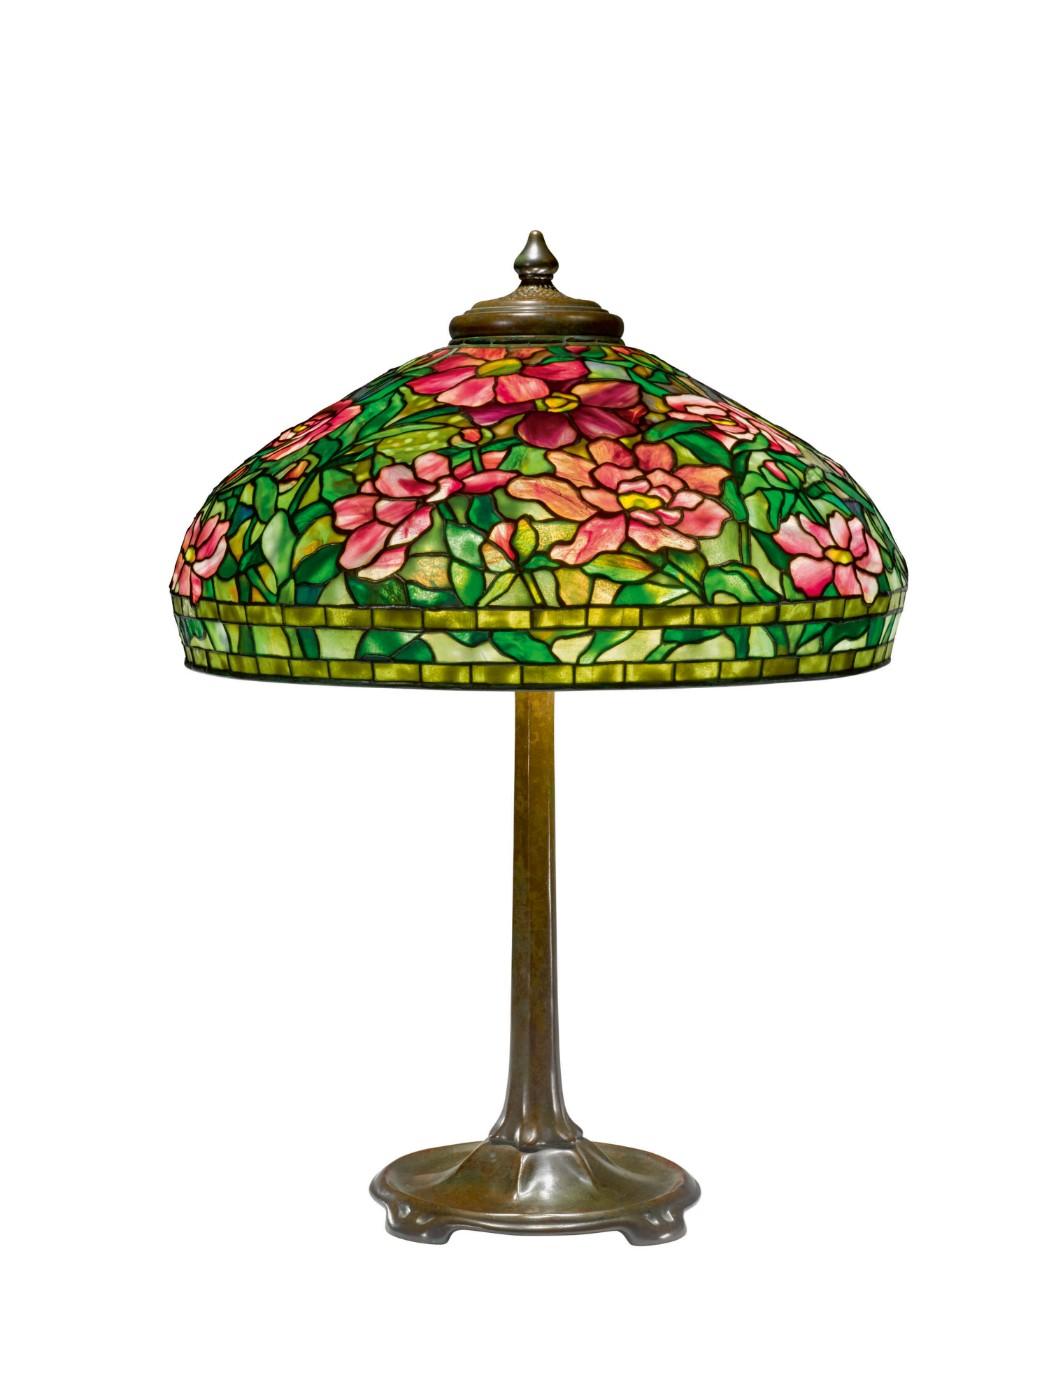 Tiffany Studios, “Peony” Table Lamp, circa 1915